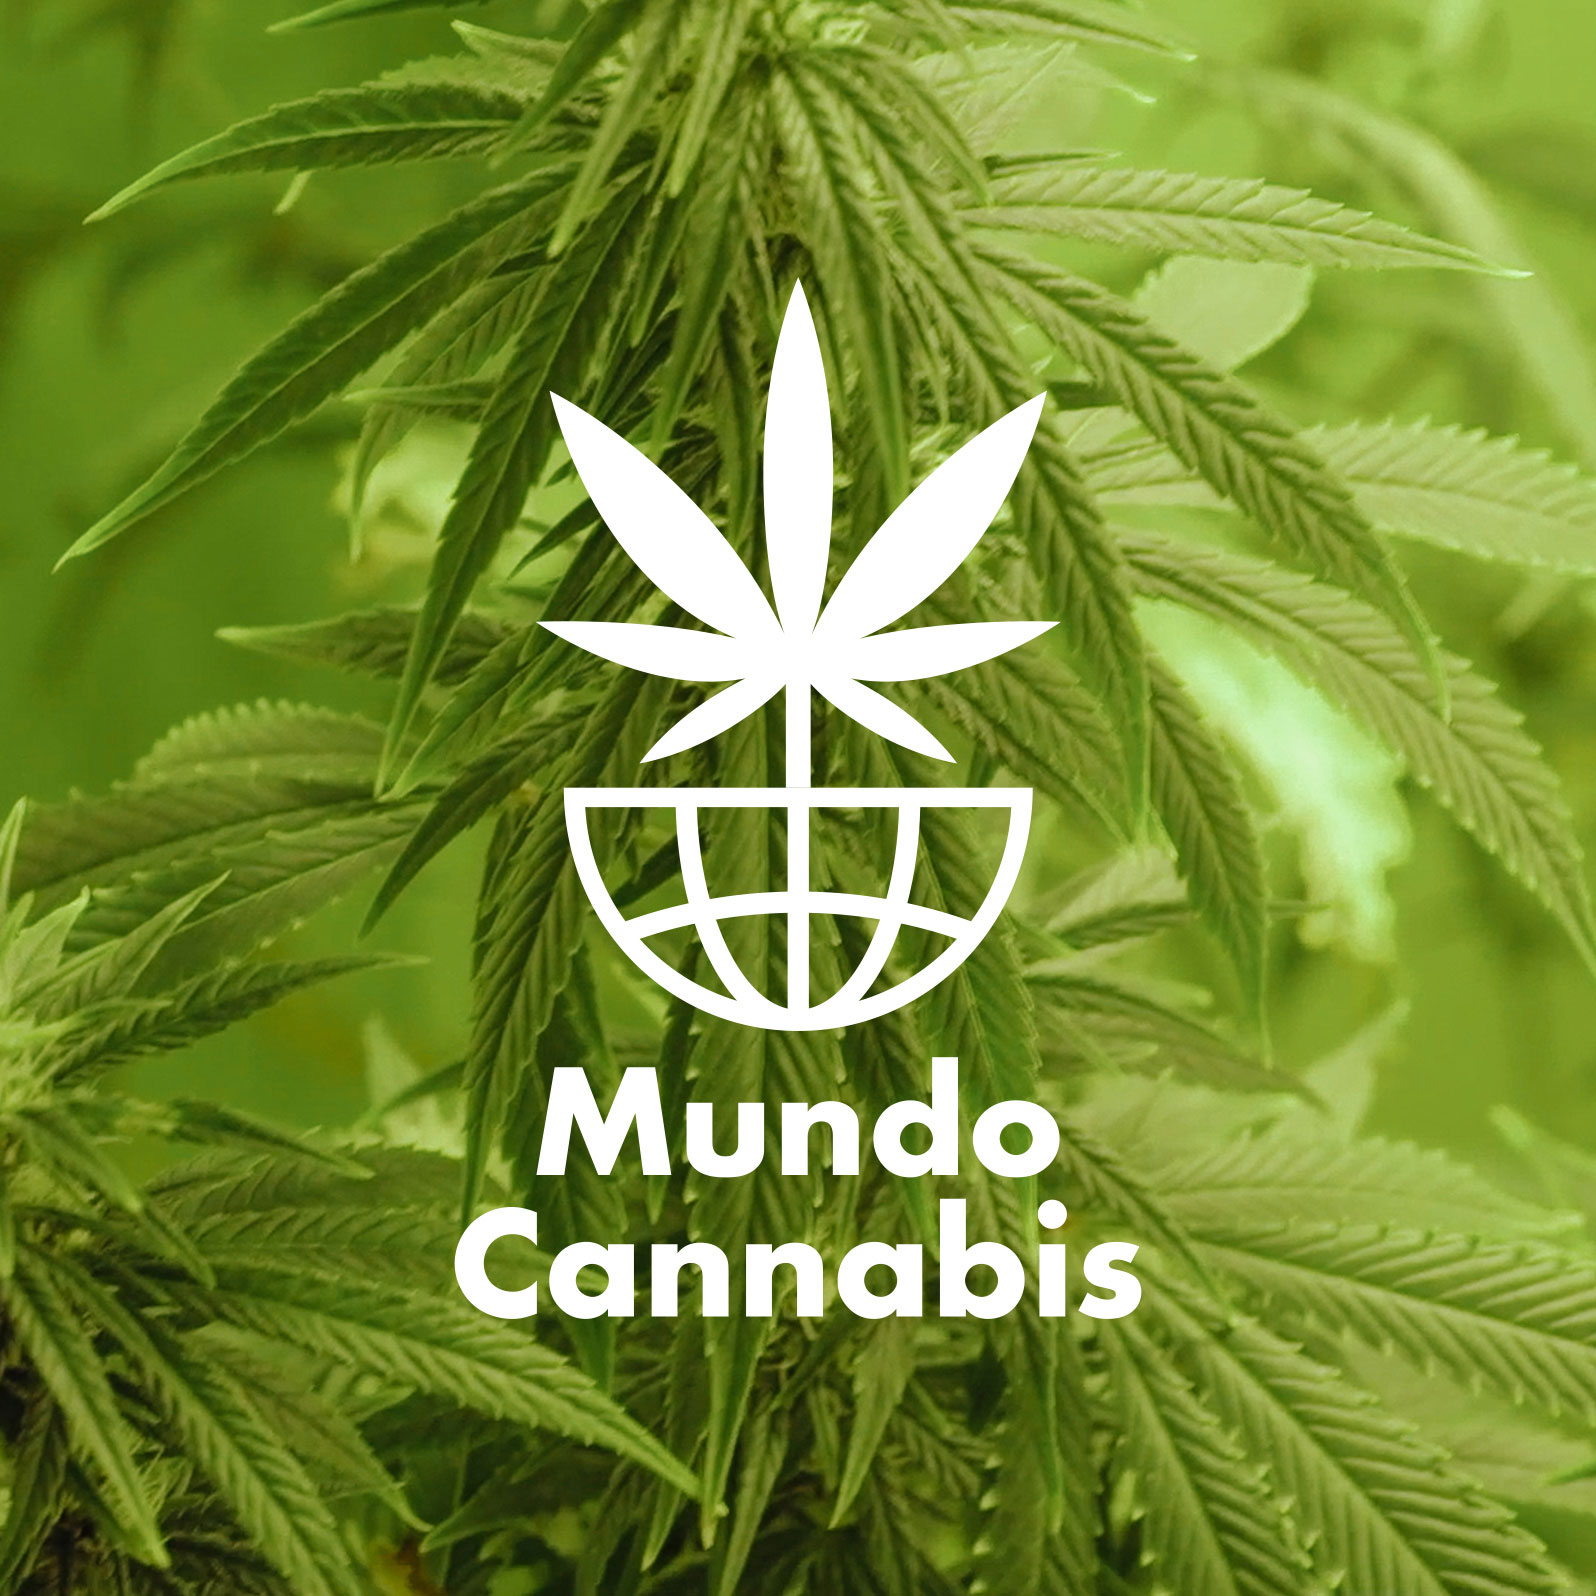 Mundo Cannabis